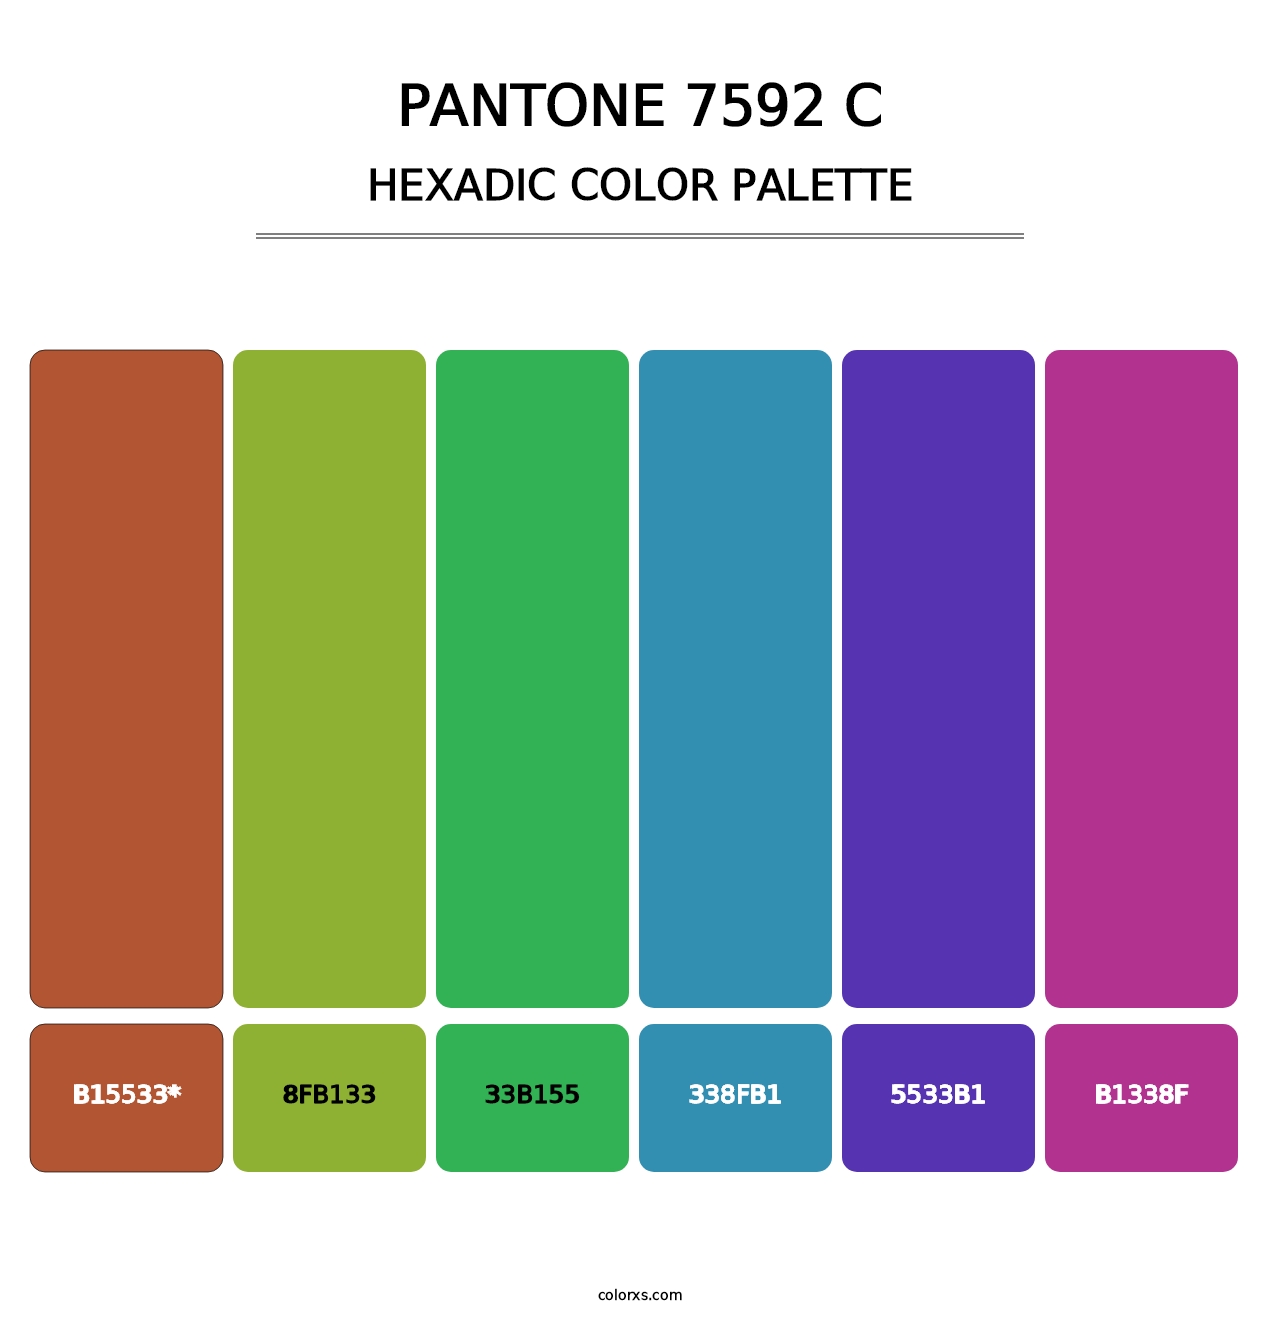 PANTONE 7592 C - Hexadic Color Palette